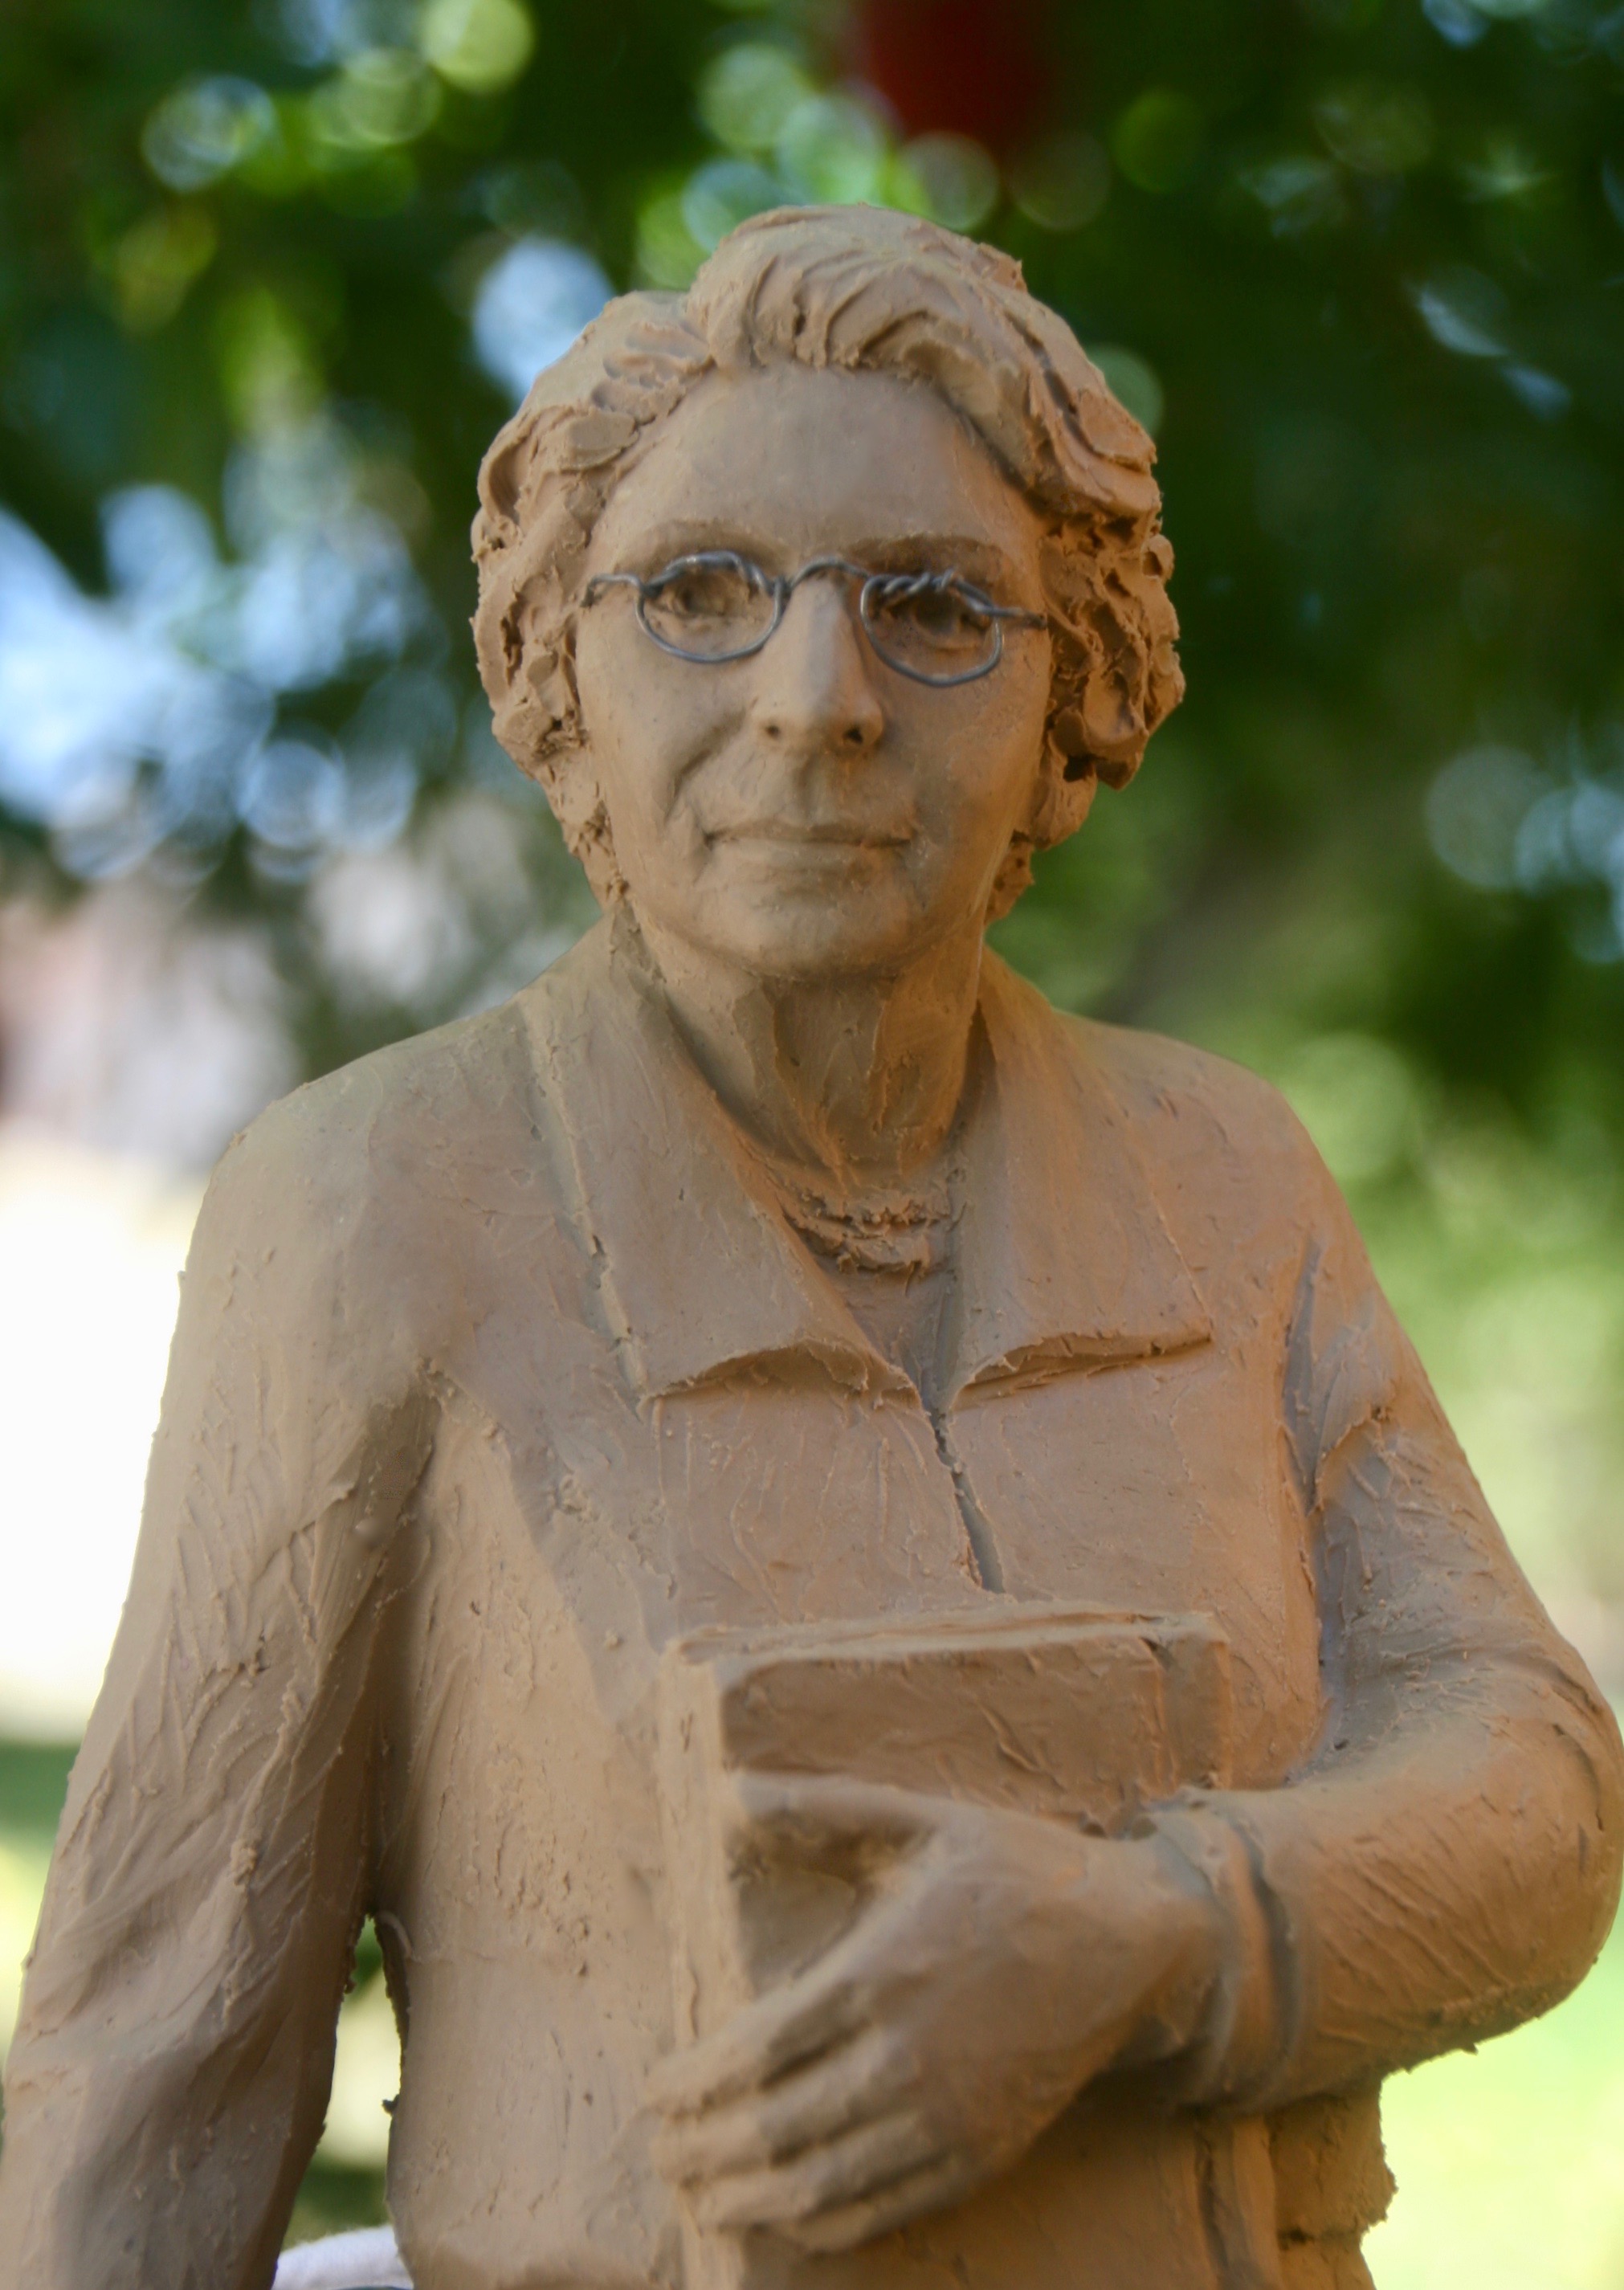 Maquette of the Juanita Brooks statue